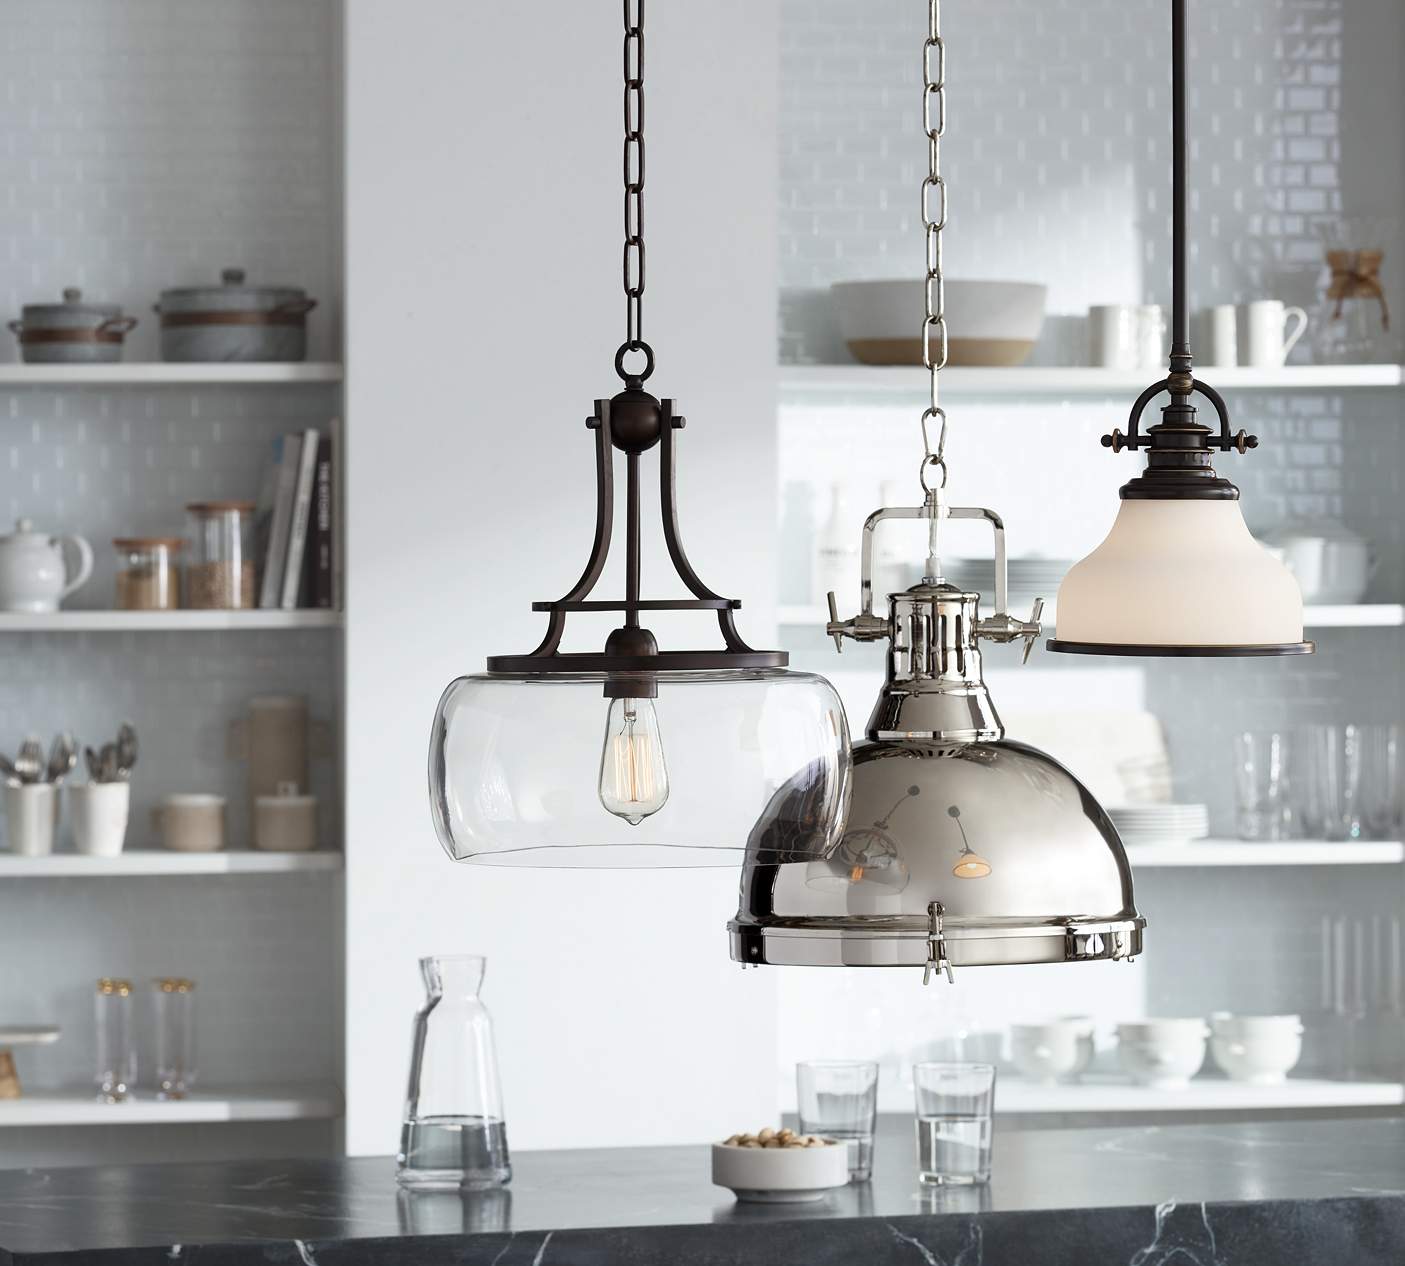 Hanging Pendant Lights Over Kitchen Counter - Best Design Idea